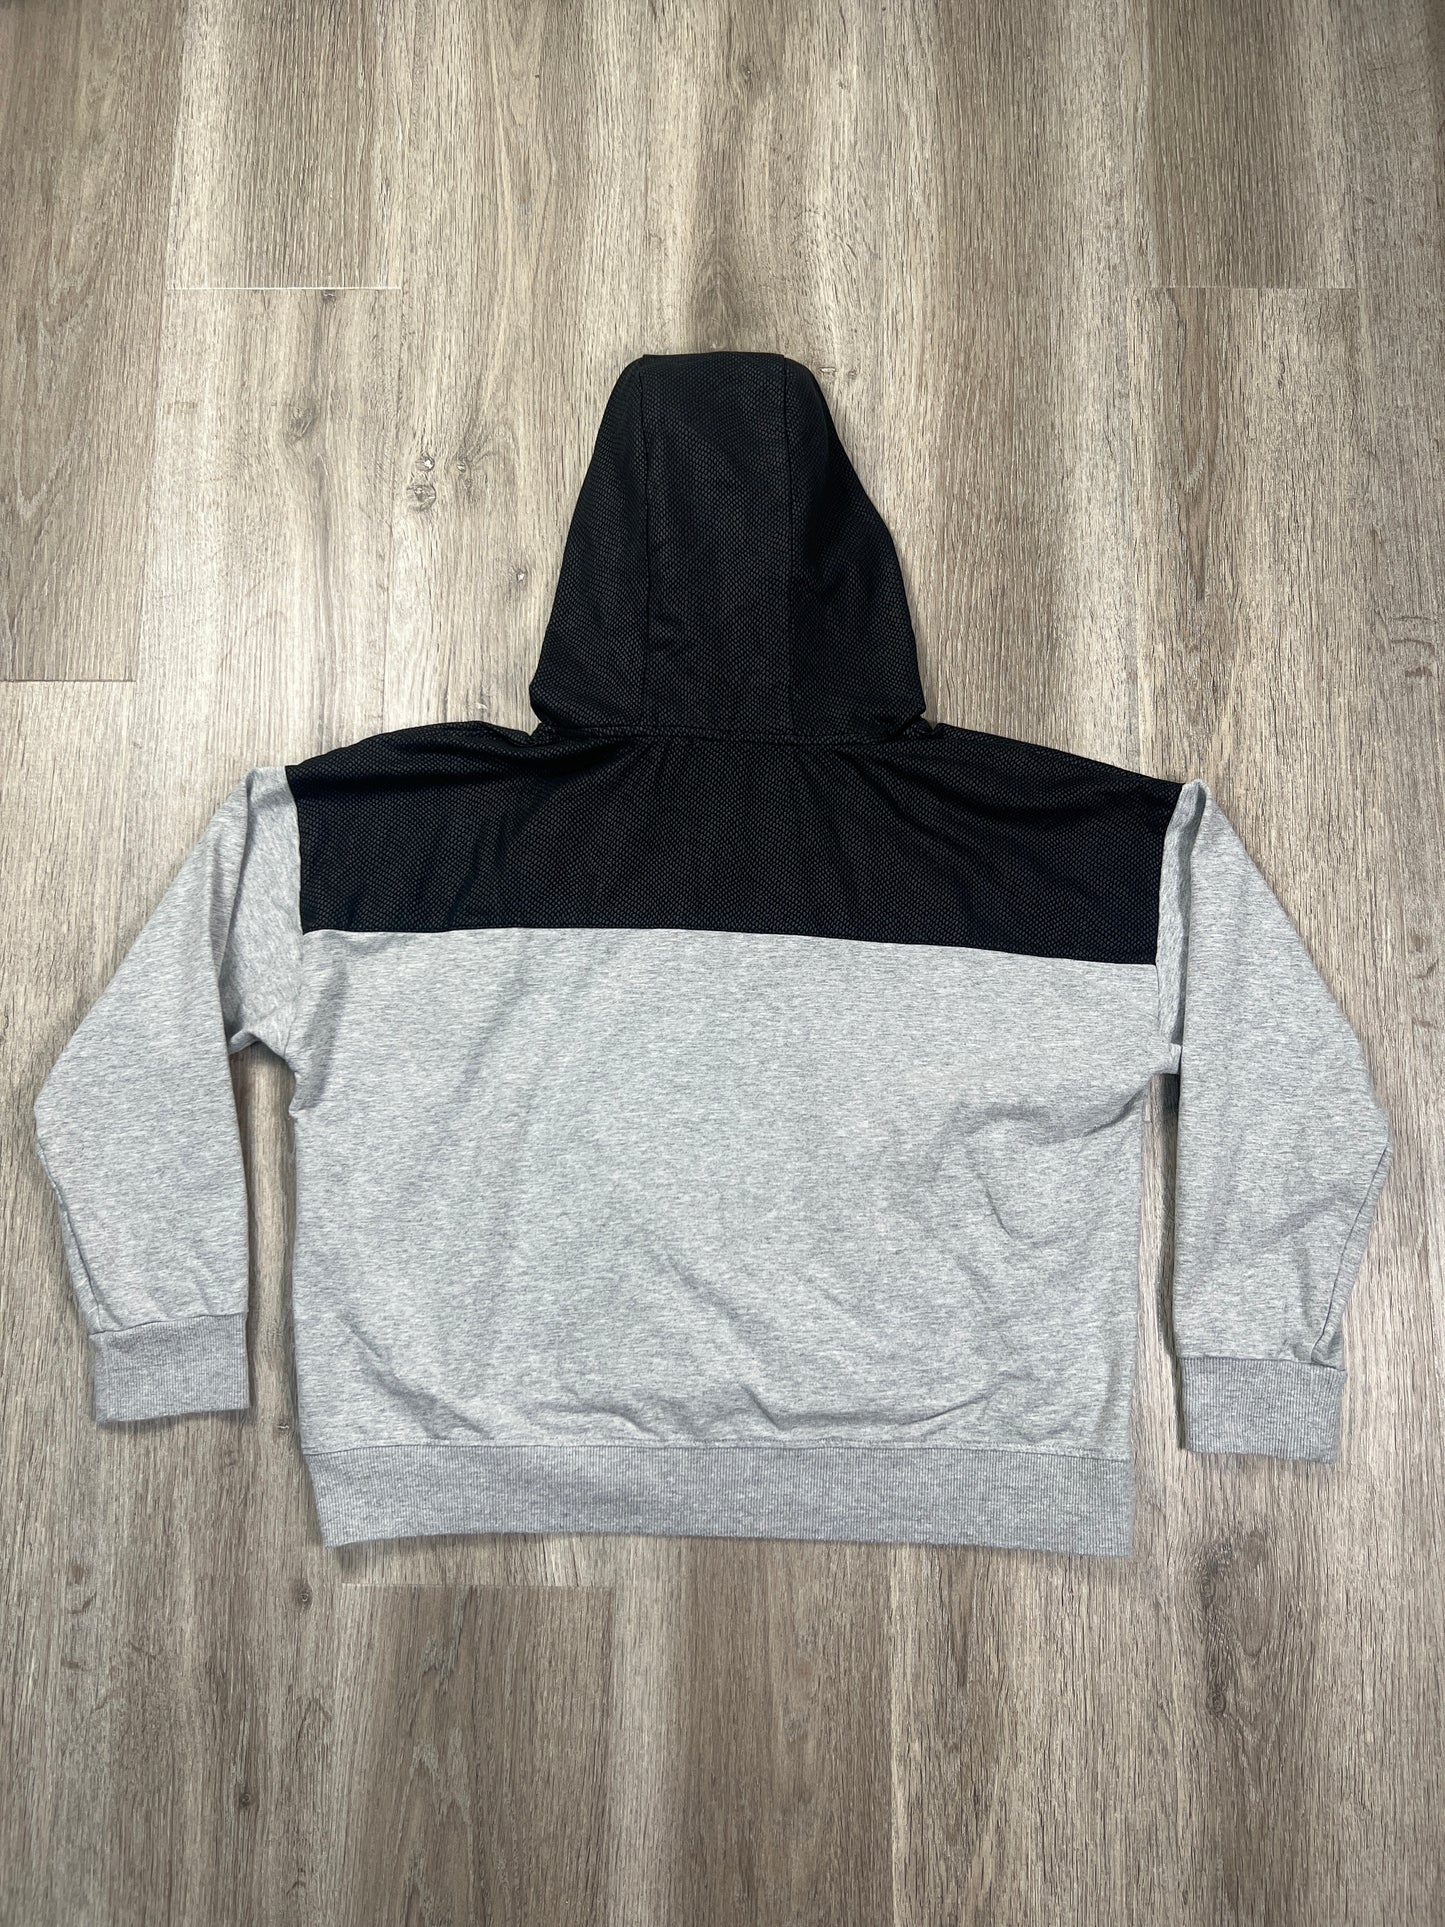 Sweatshirt Hoodie By Calvin Klein  Size: L